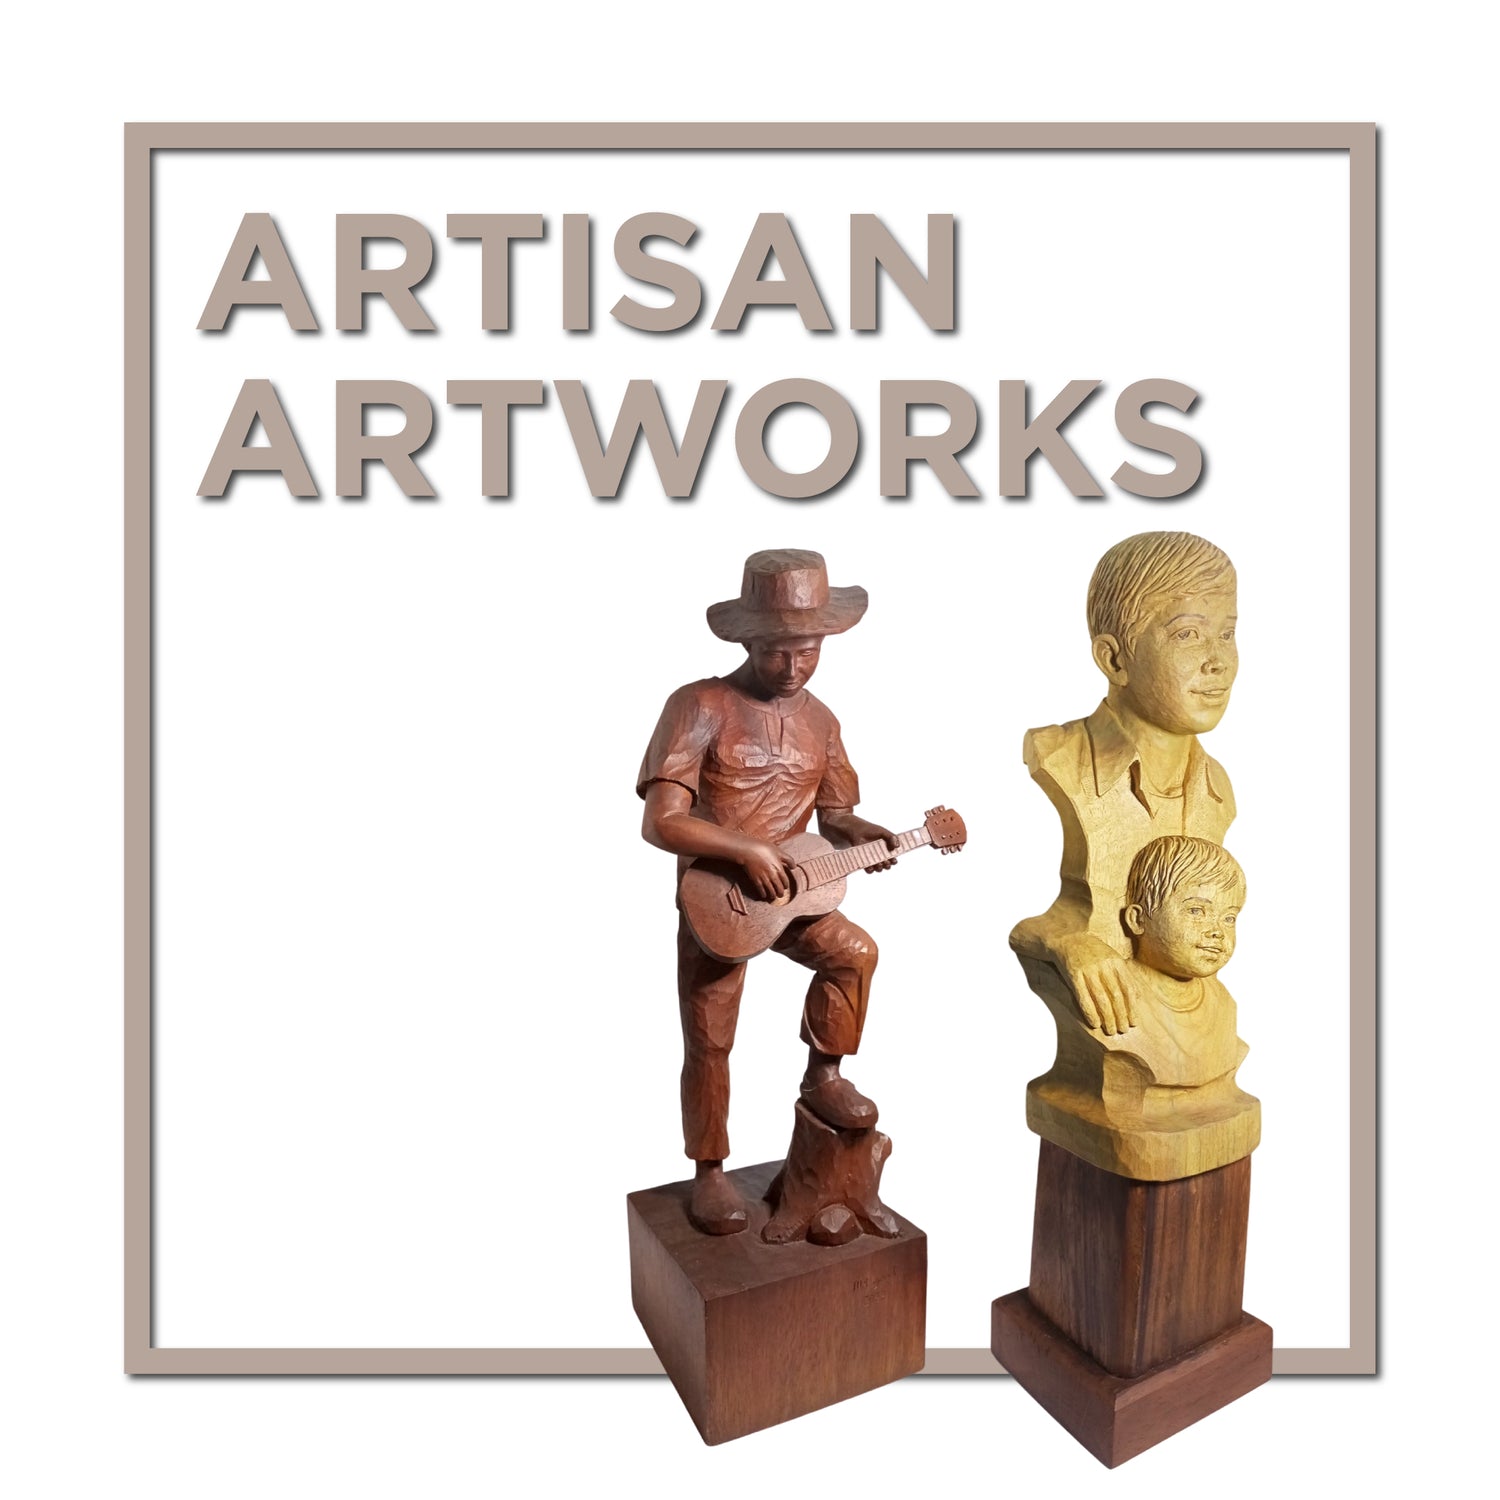 ARTISAN ARTWORKS